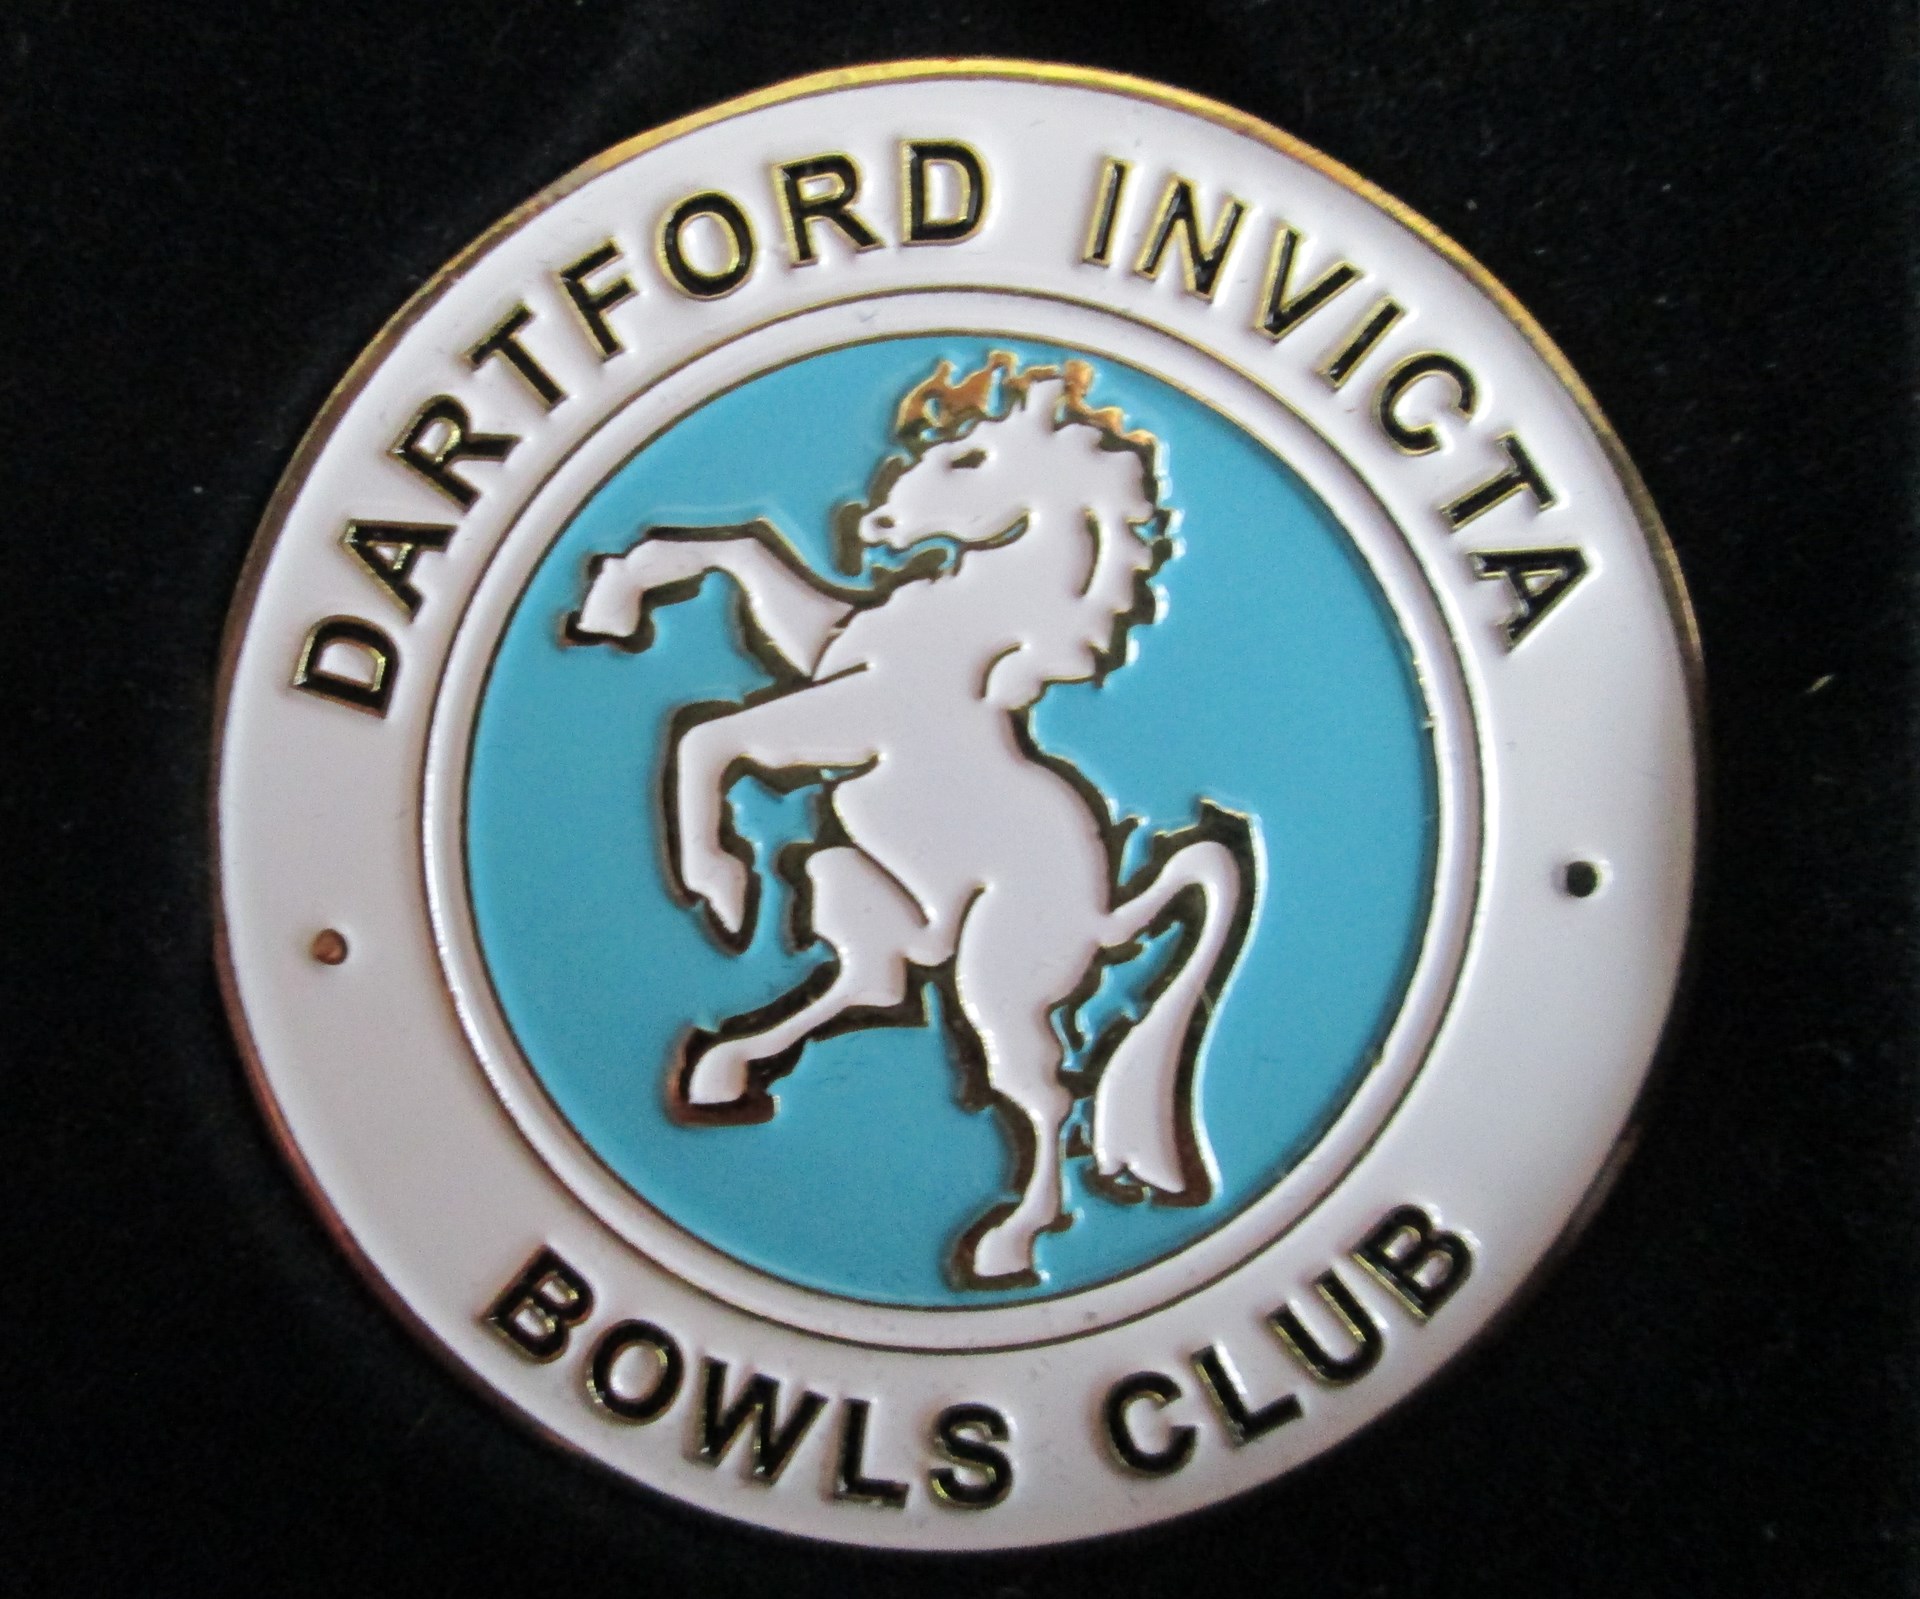 Dartford Invicta S & S Bowls Club About Us